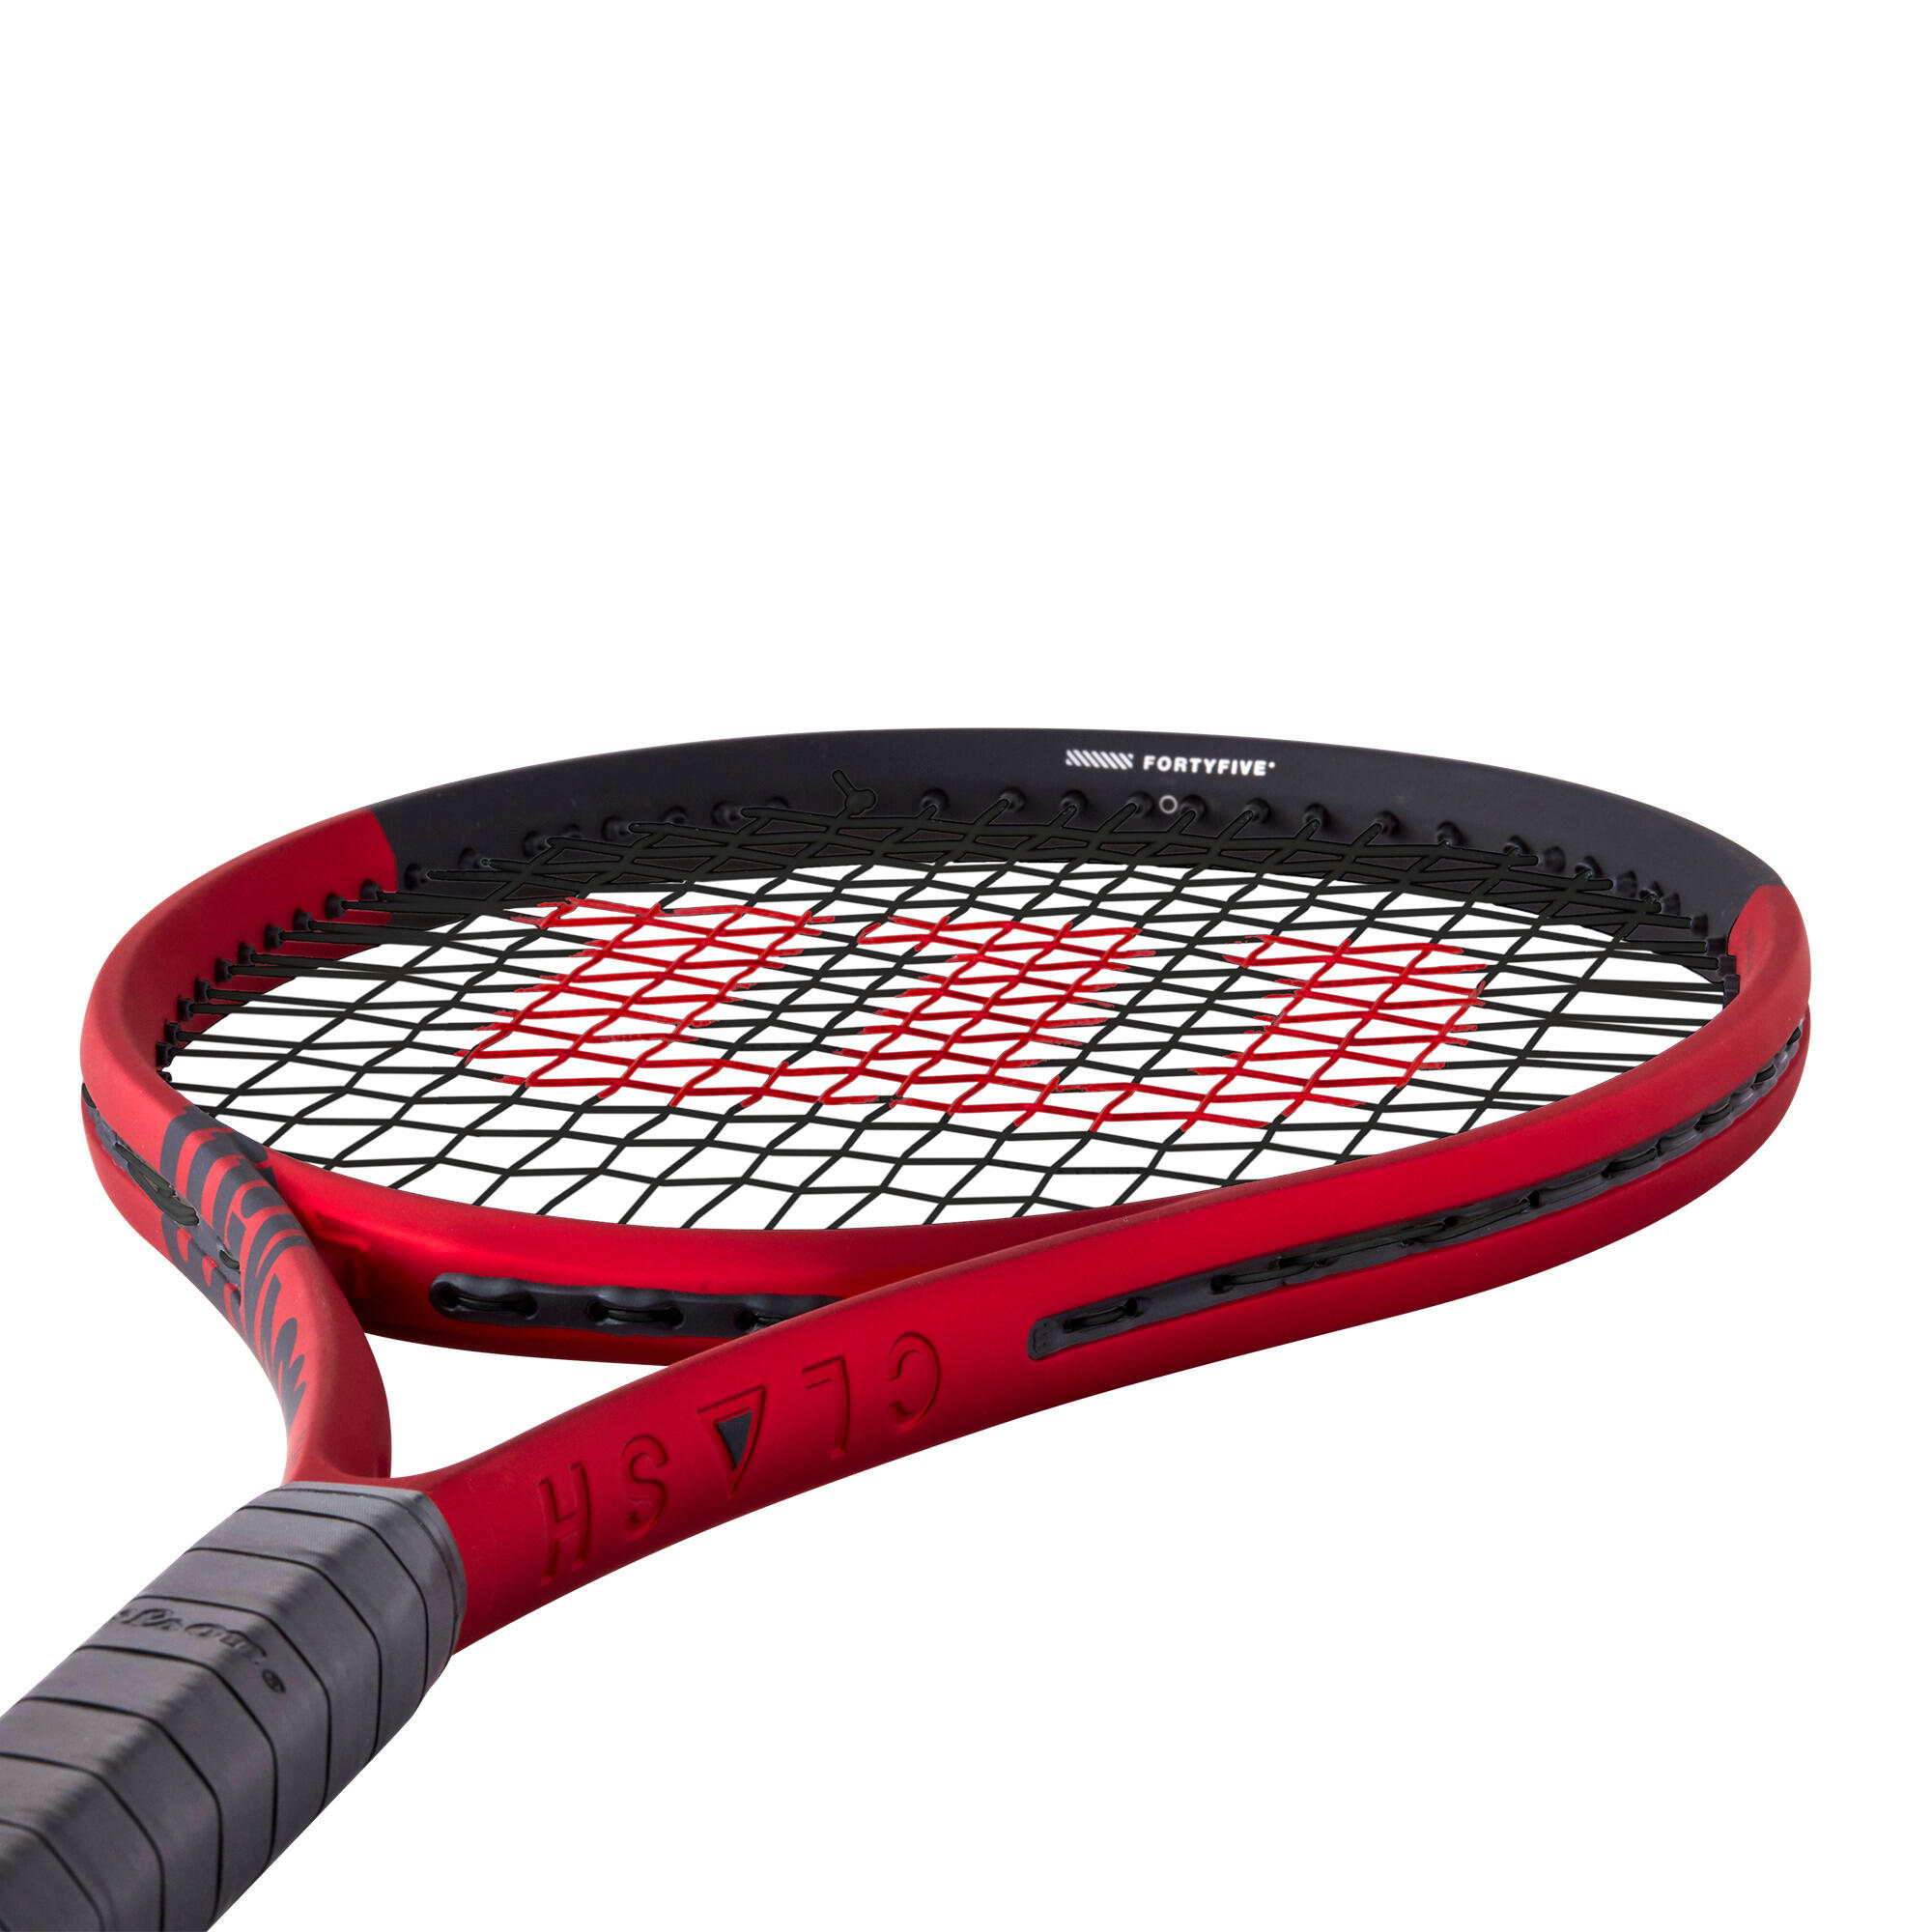 Adult Tennis Racket Clash 100 V2 295g - Black/Red 7/8